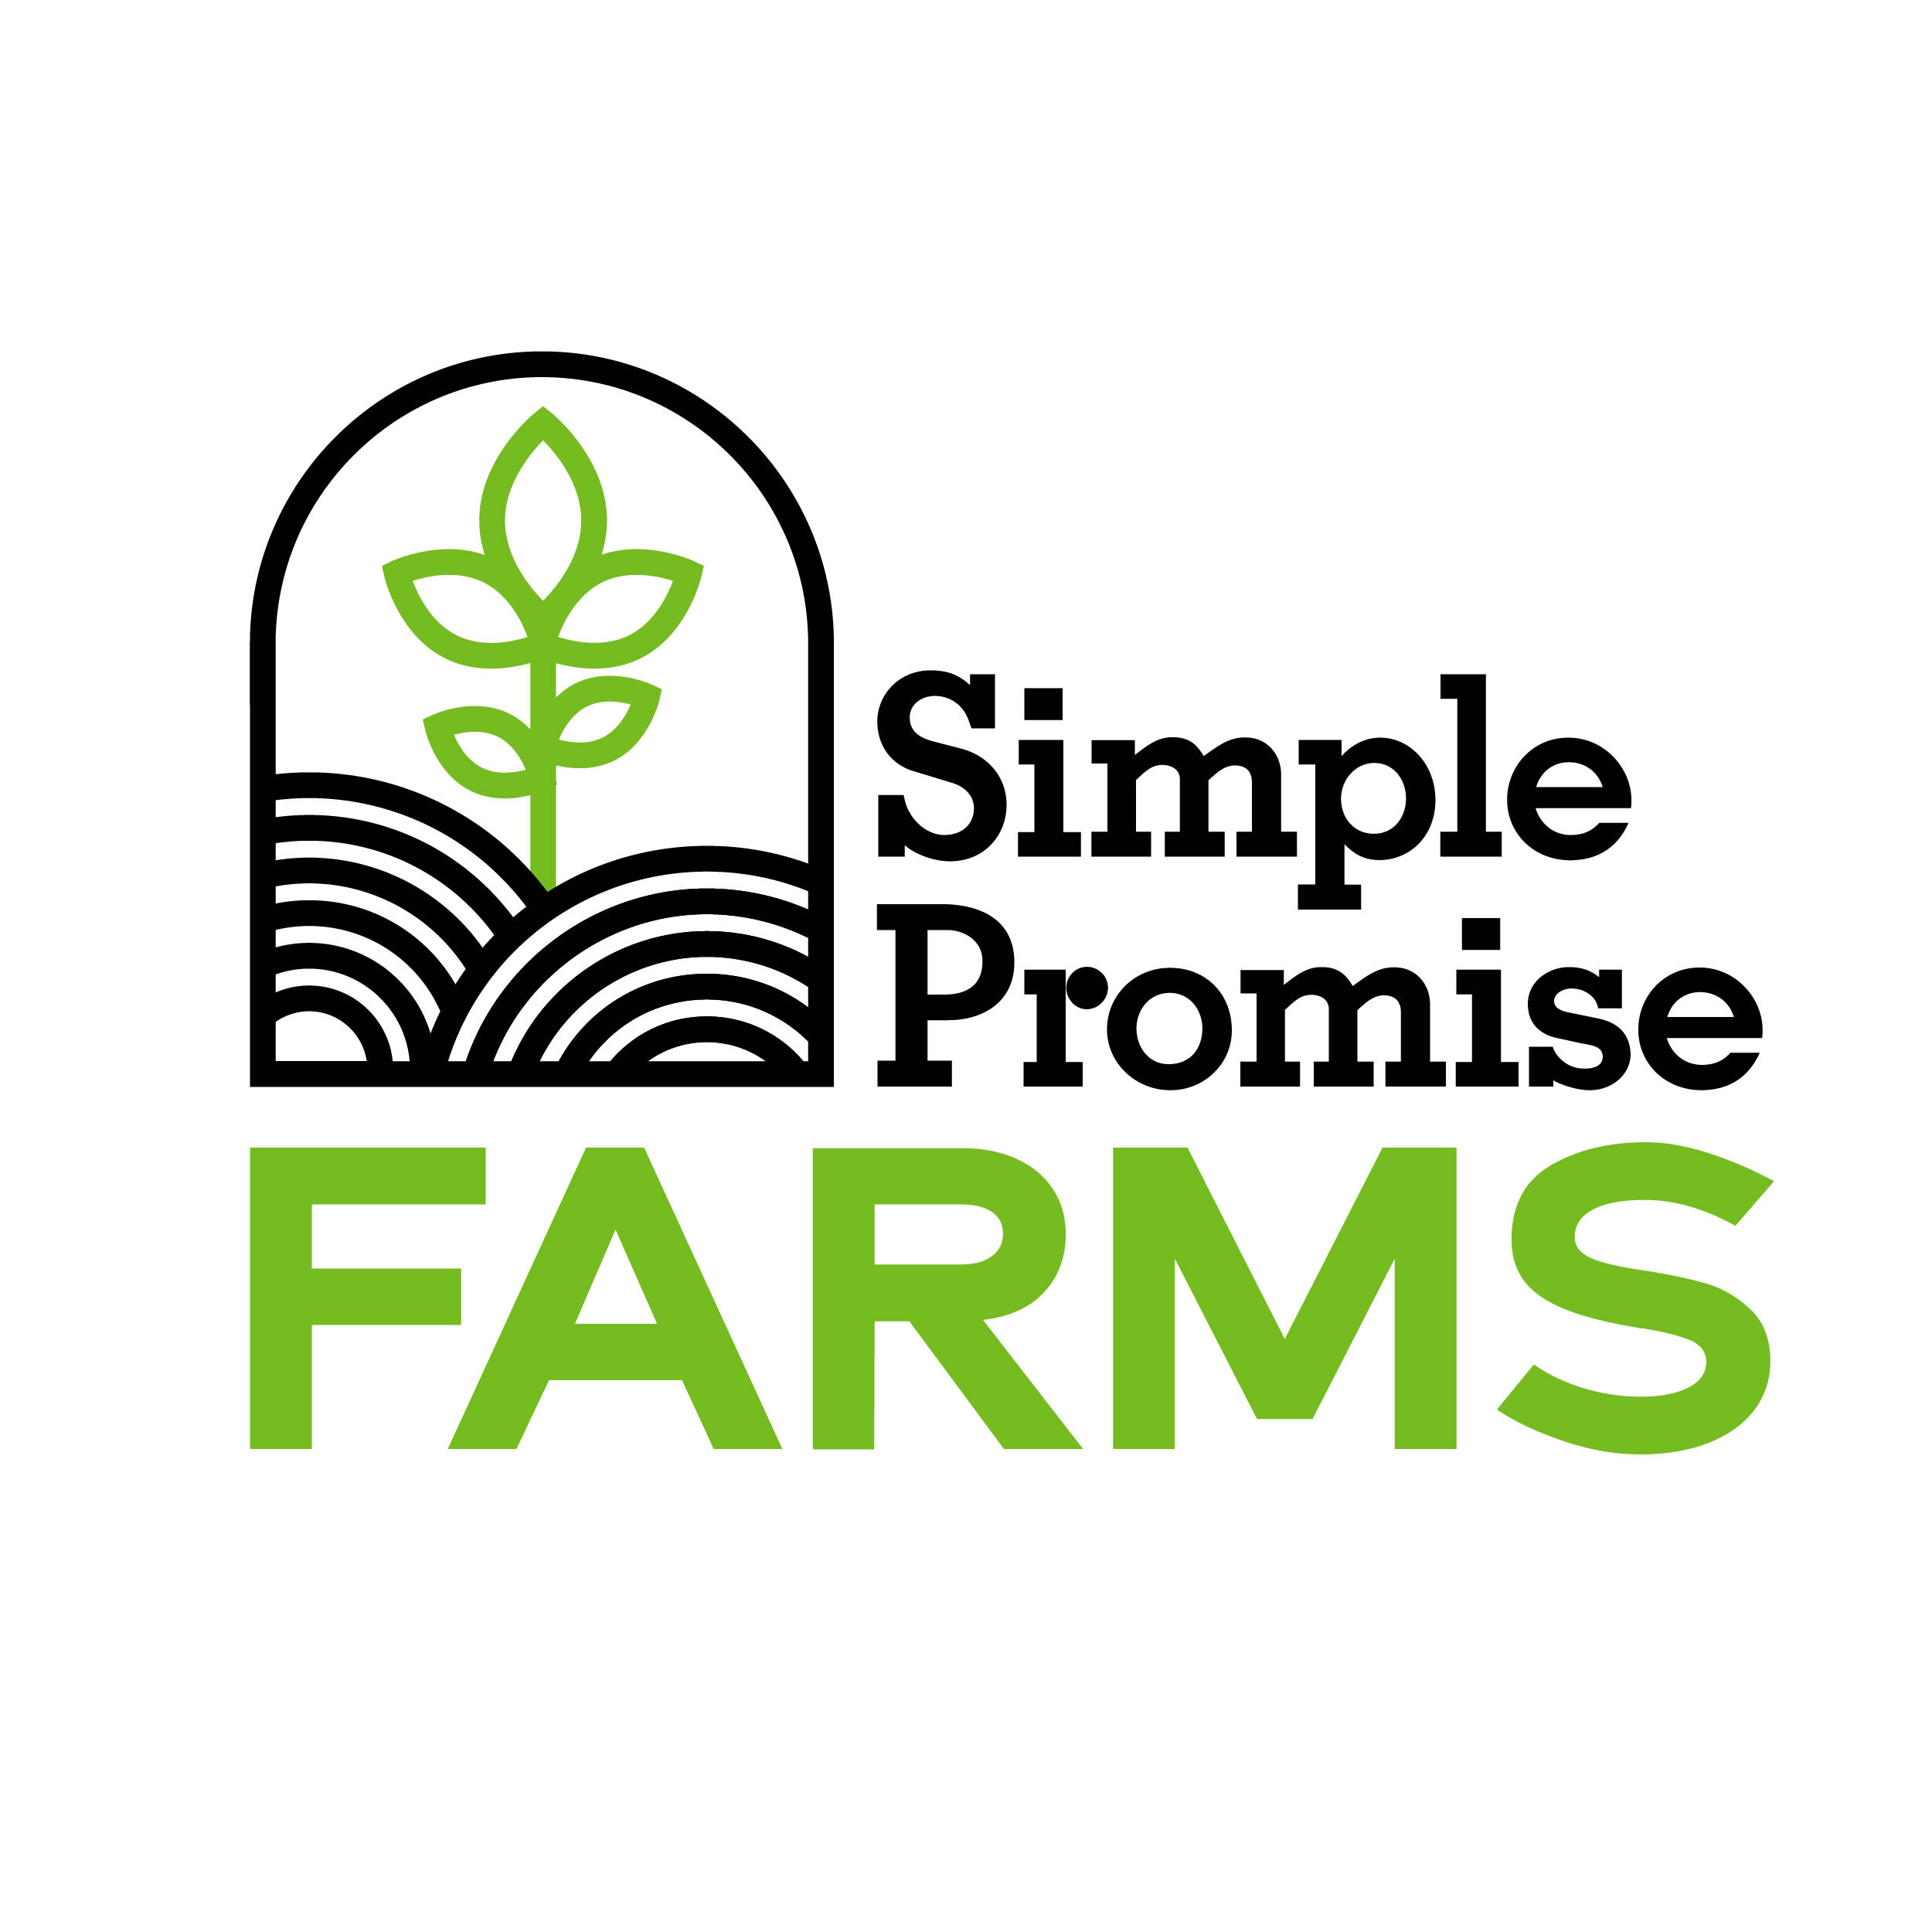 Farm-SimplePromiseFarms.jpg